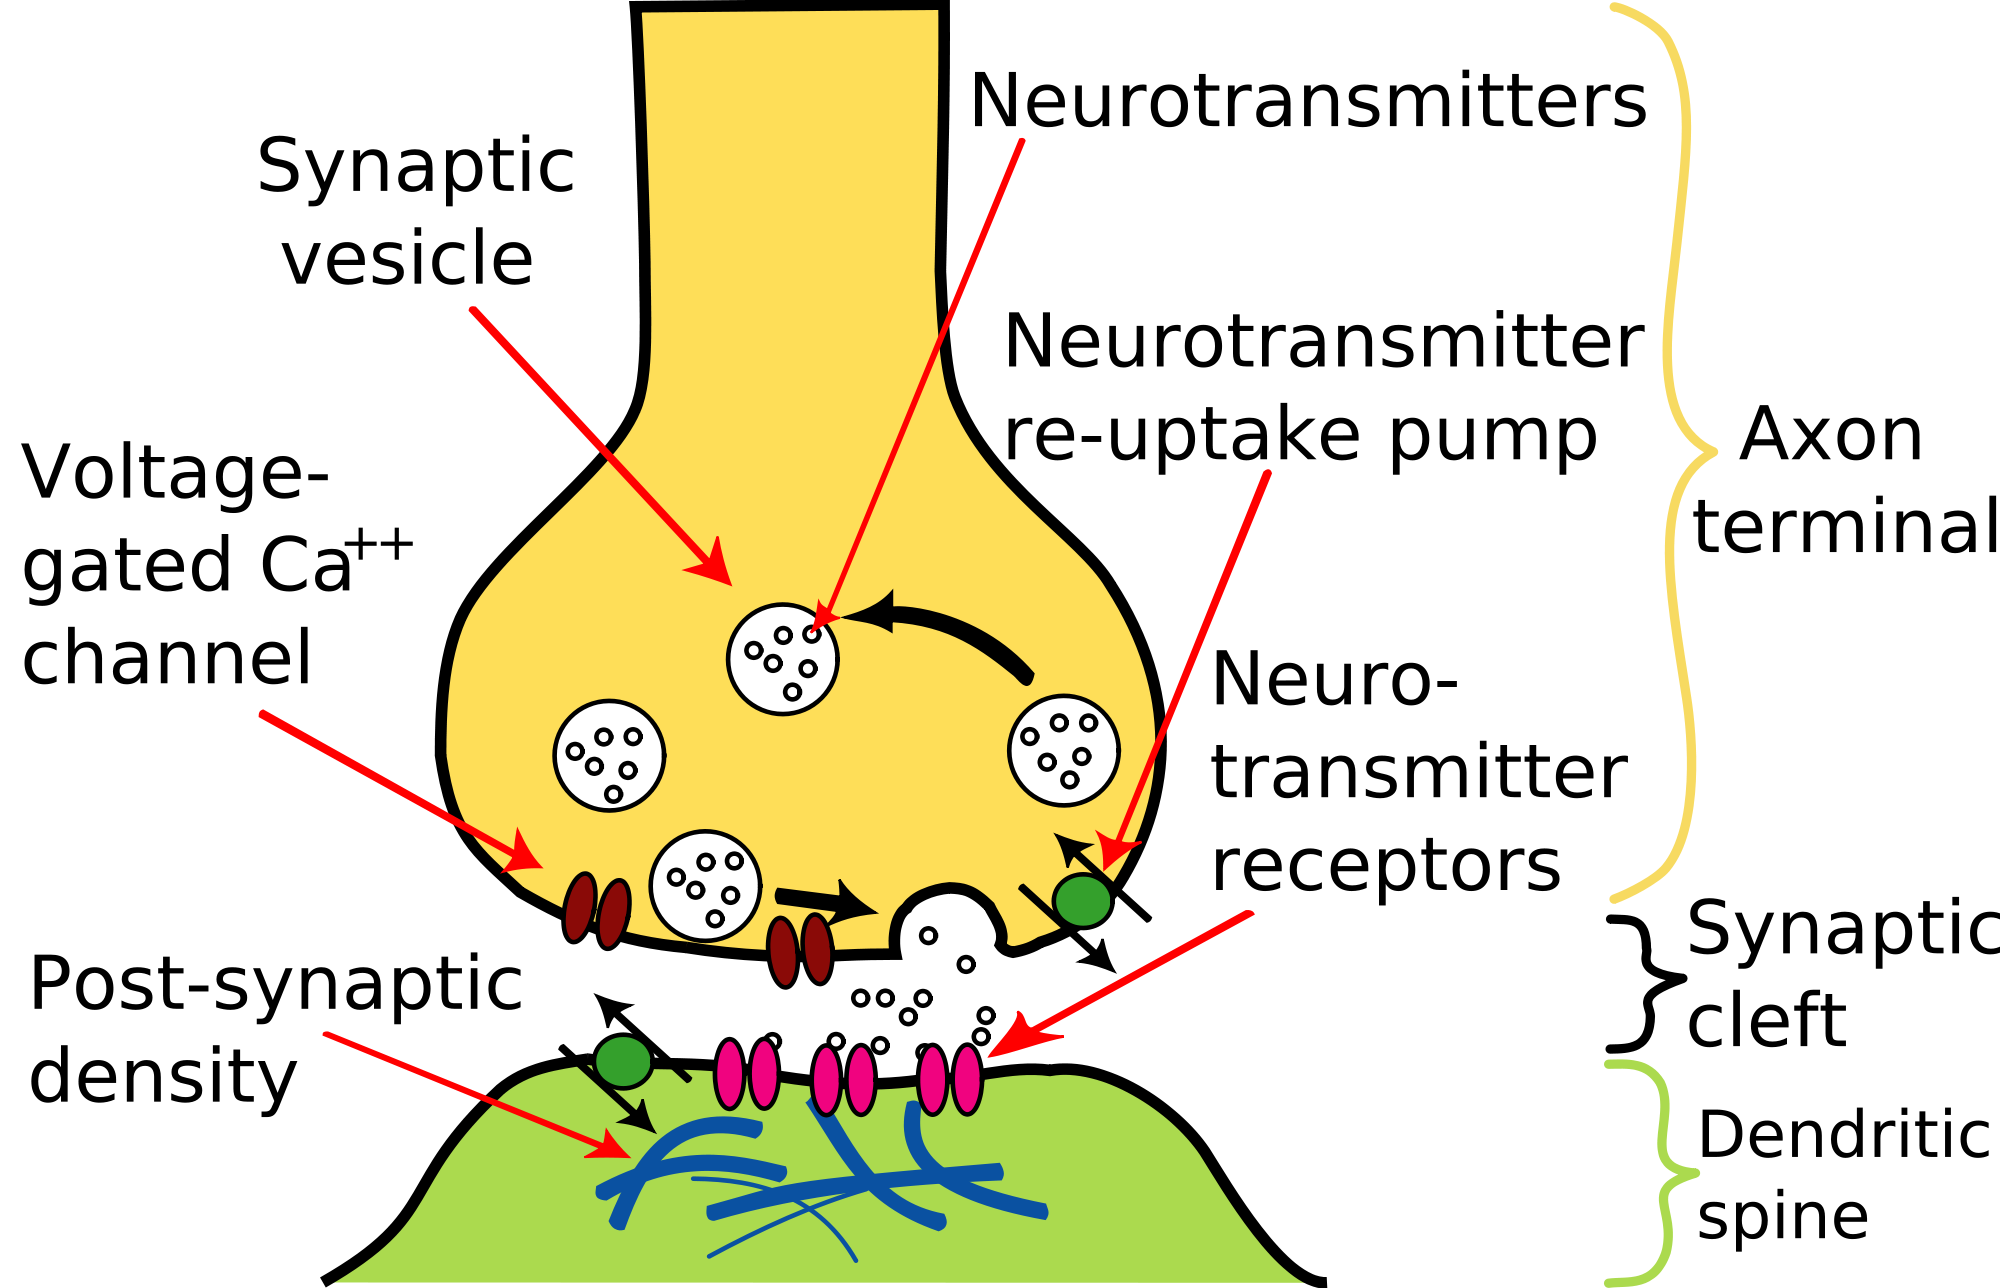 Microglia Maintenance of Neuron Synapses